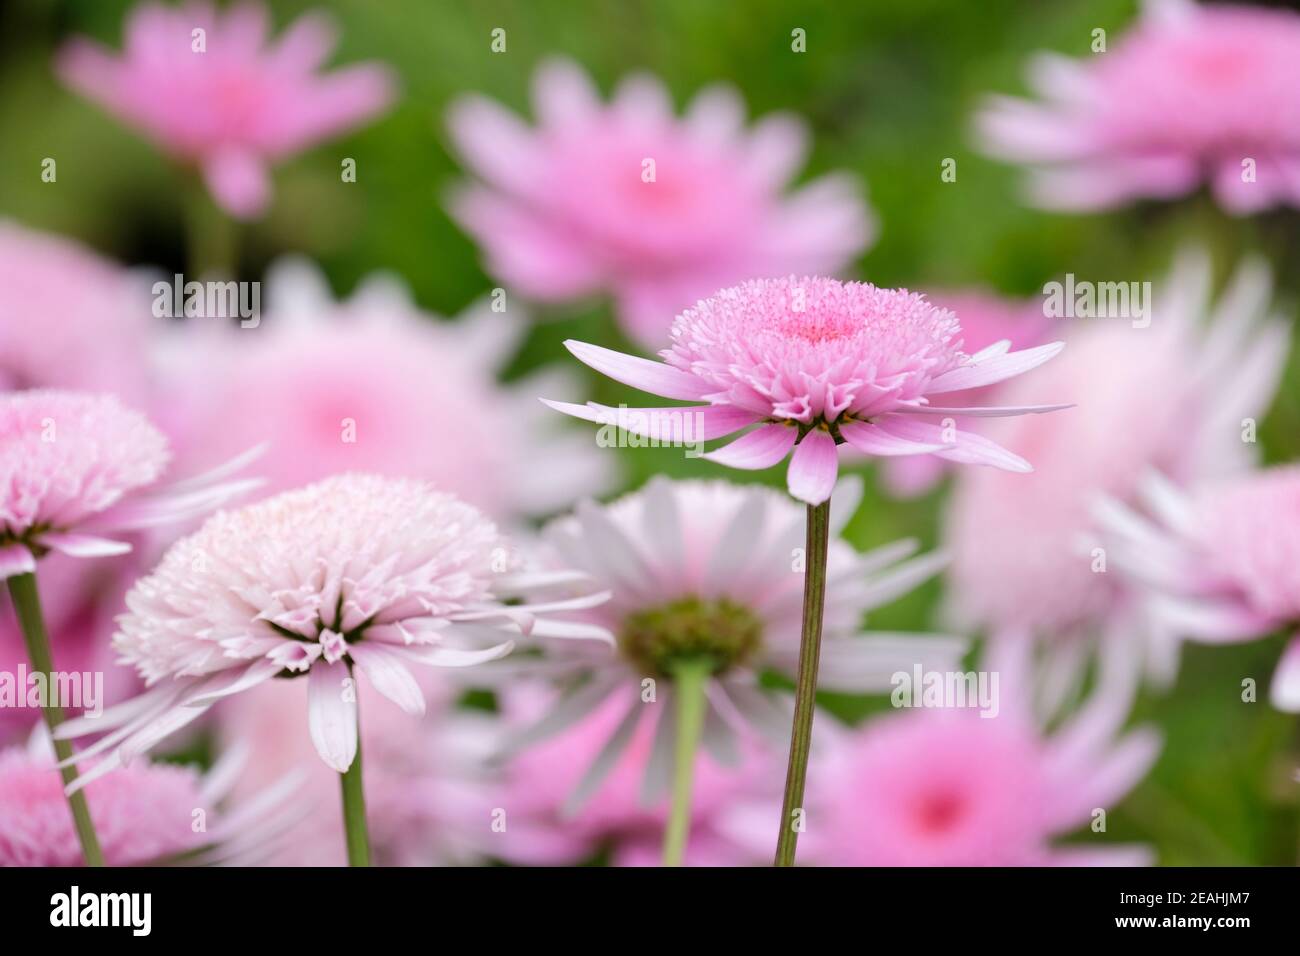 Pink flowers of Argyranthemum 'Vancouver'. Argyranthemum frutescens 'Vancouver'. Argyranthemum Marguerite 'Vancouver' Stock Photo